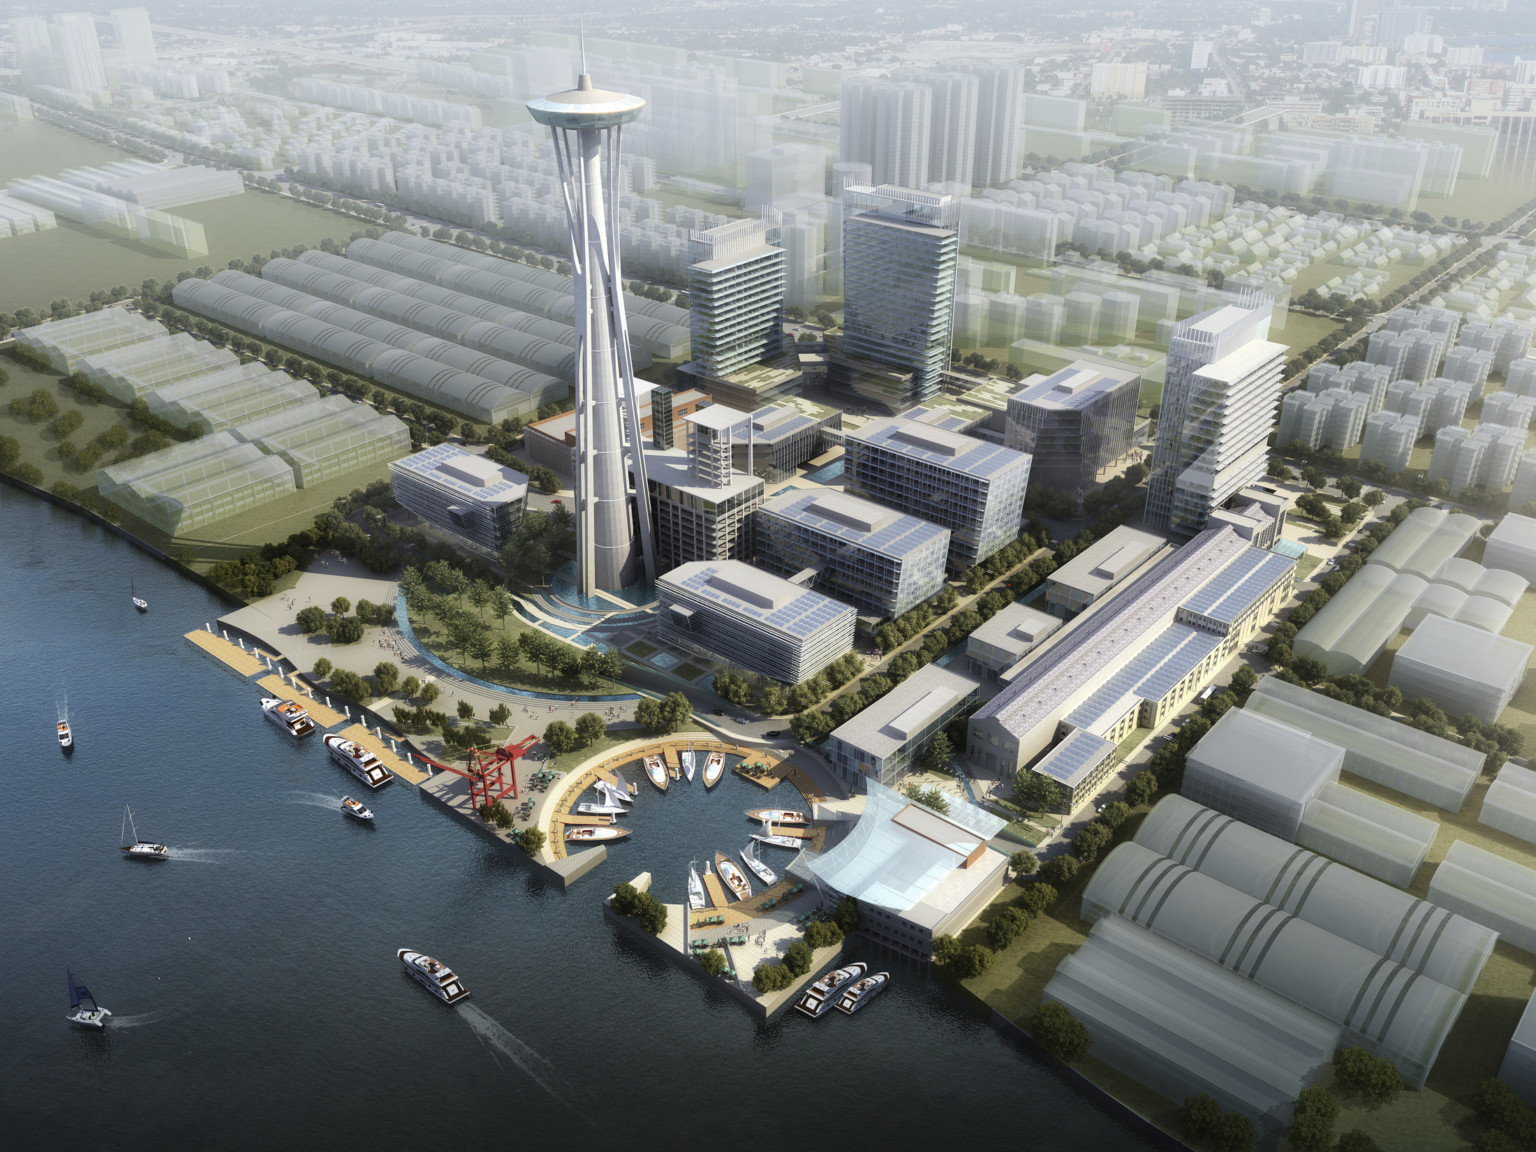 Conceptual design for Yang Shu Pu Power Plant along bank of Huangpu River. Mixed-use buildings surround pedestrian areas